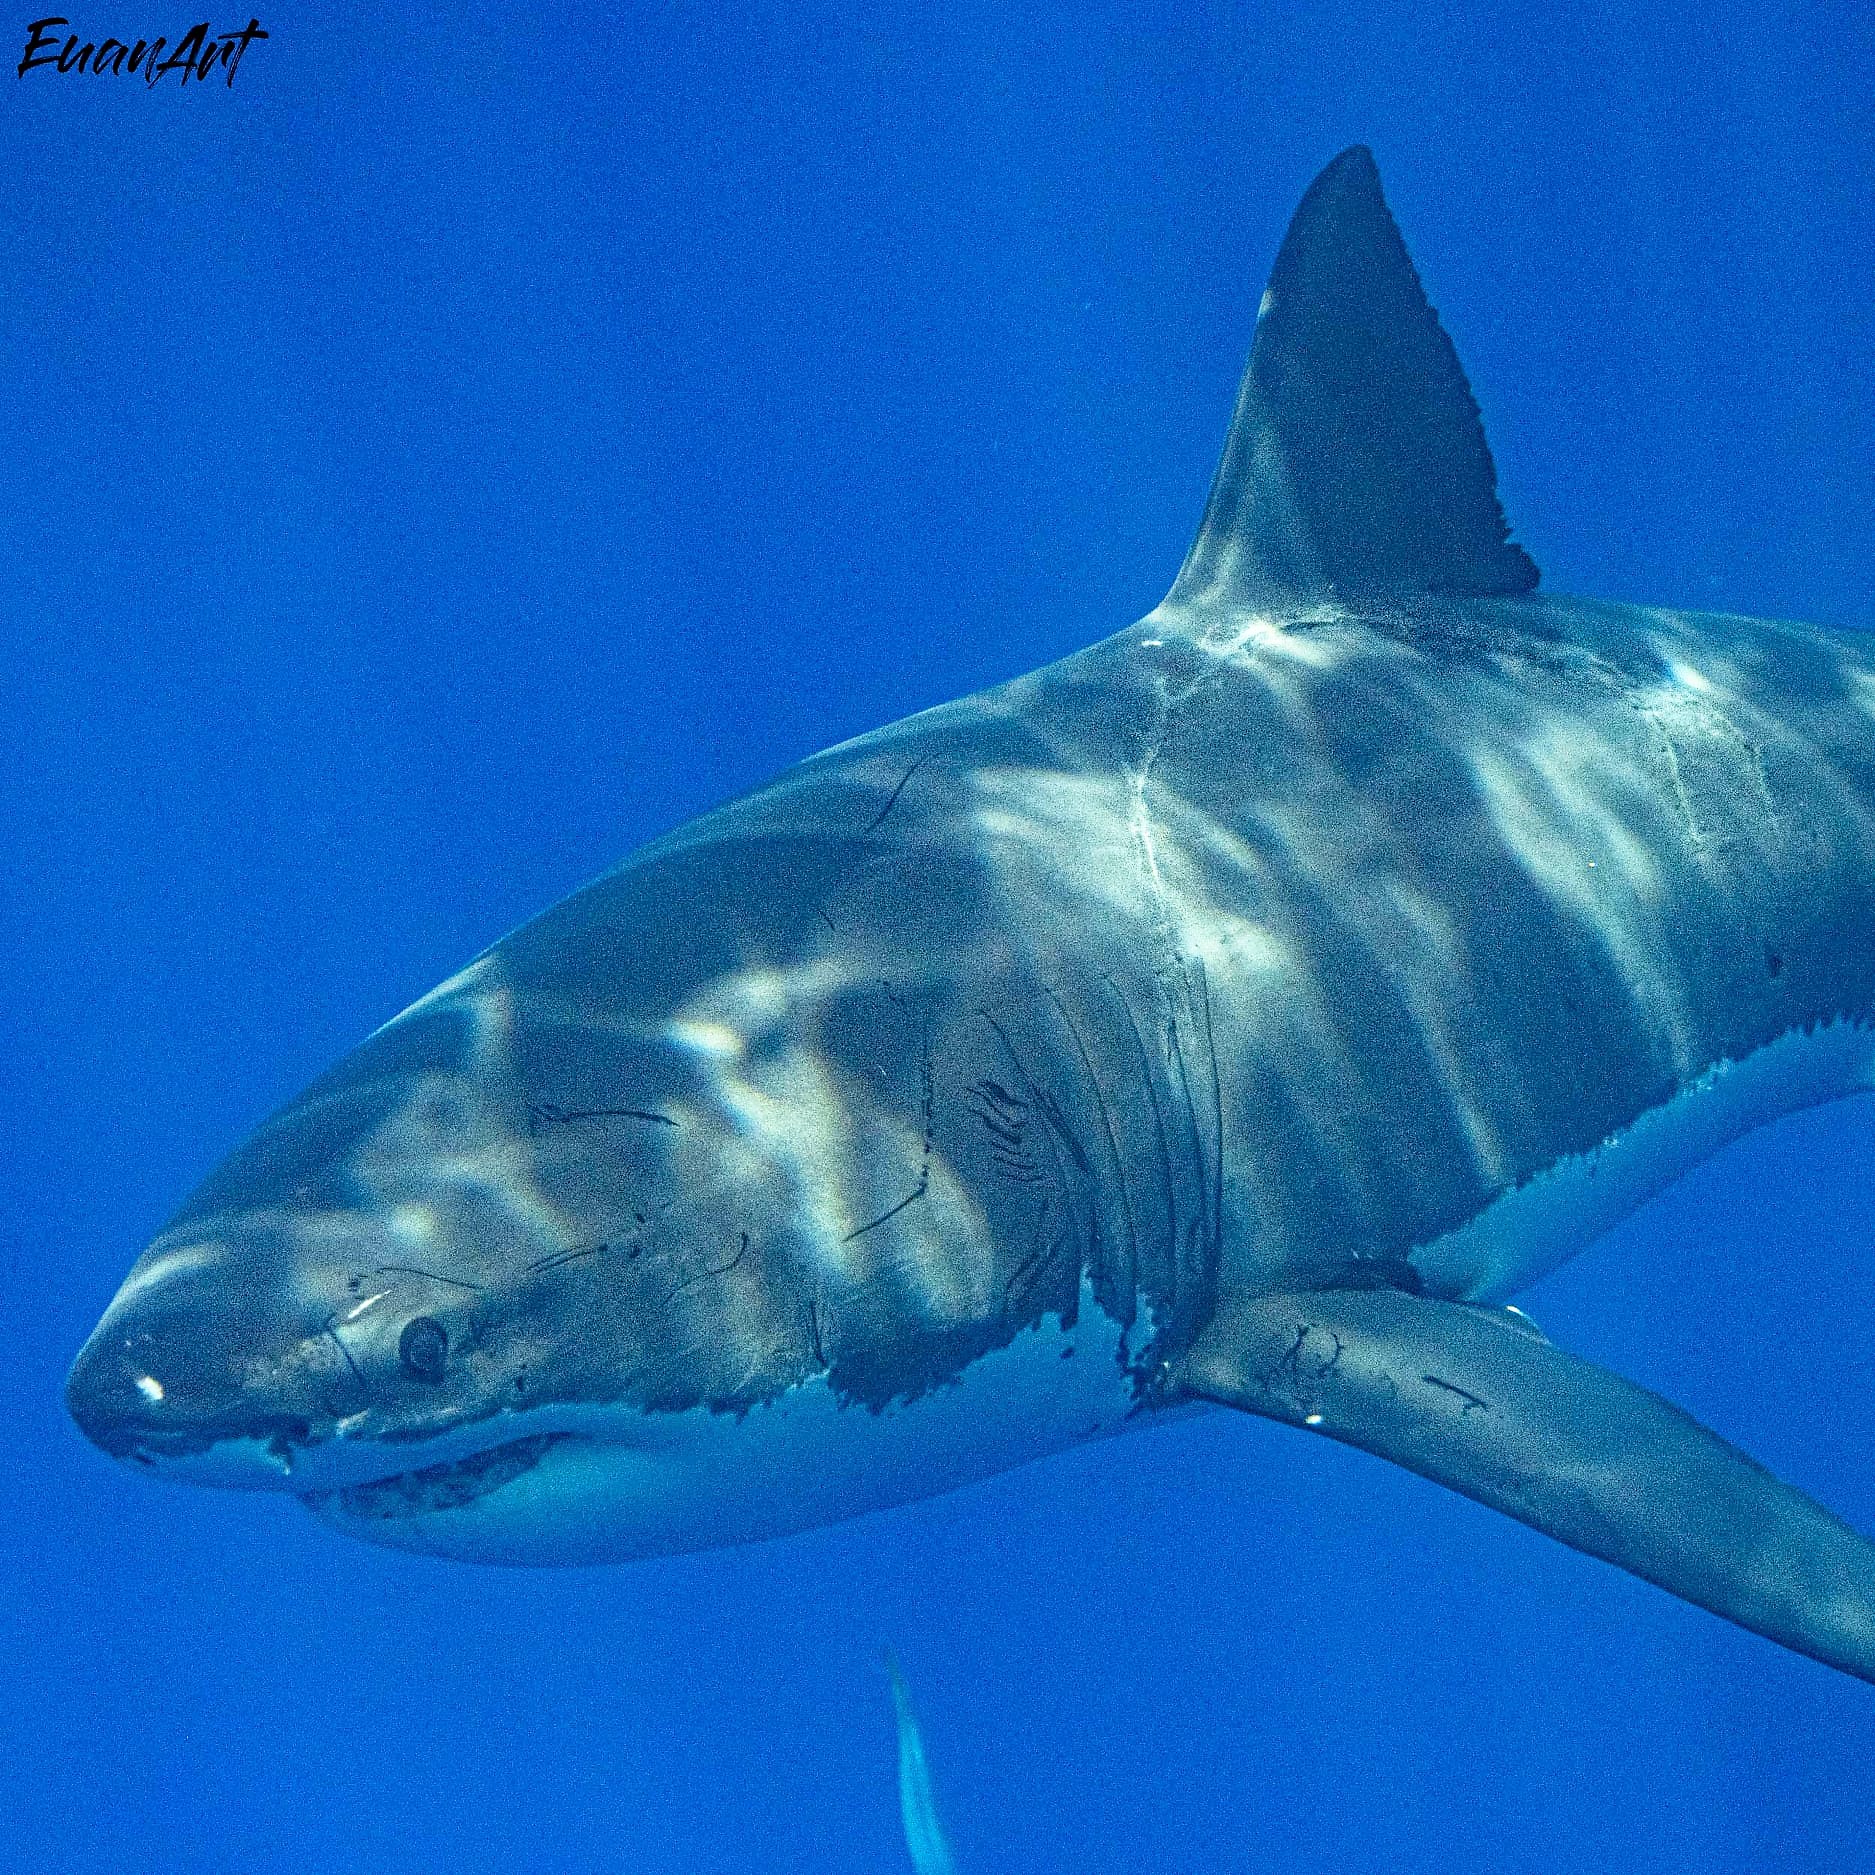 "Seabatch" an 11-foot white shark, sporting a giant bite mark. Image credit: Euan Rannachan 